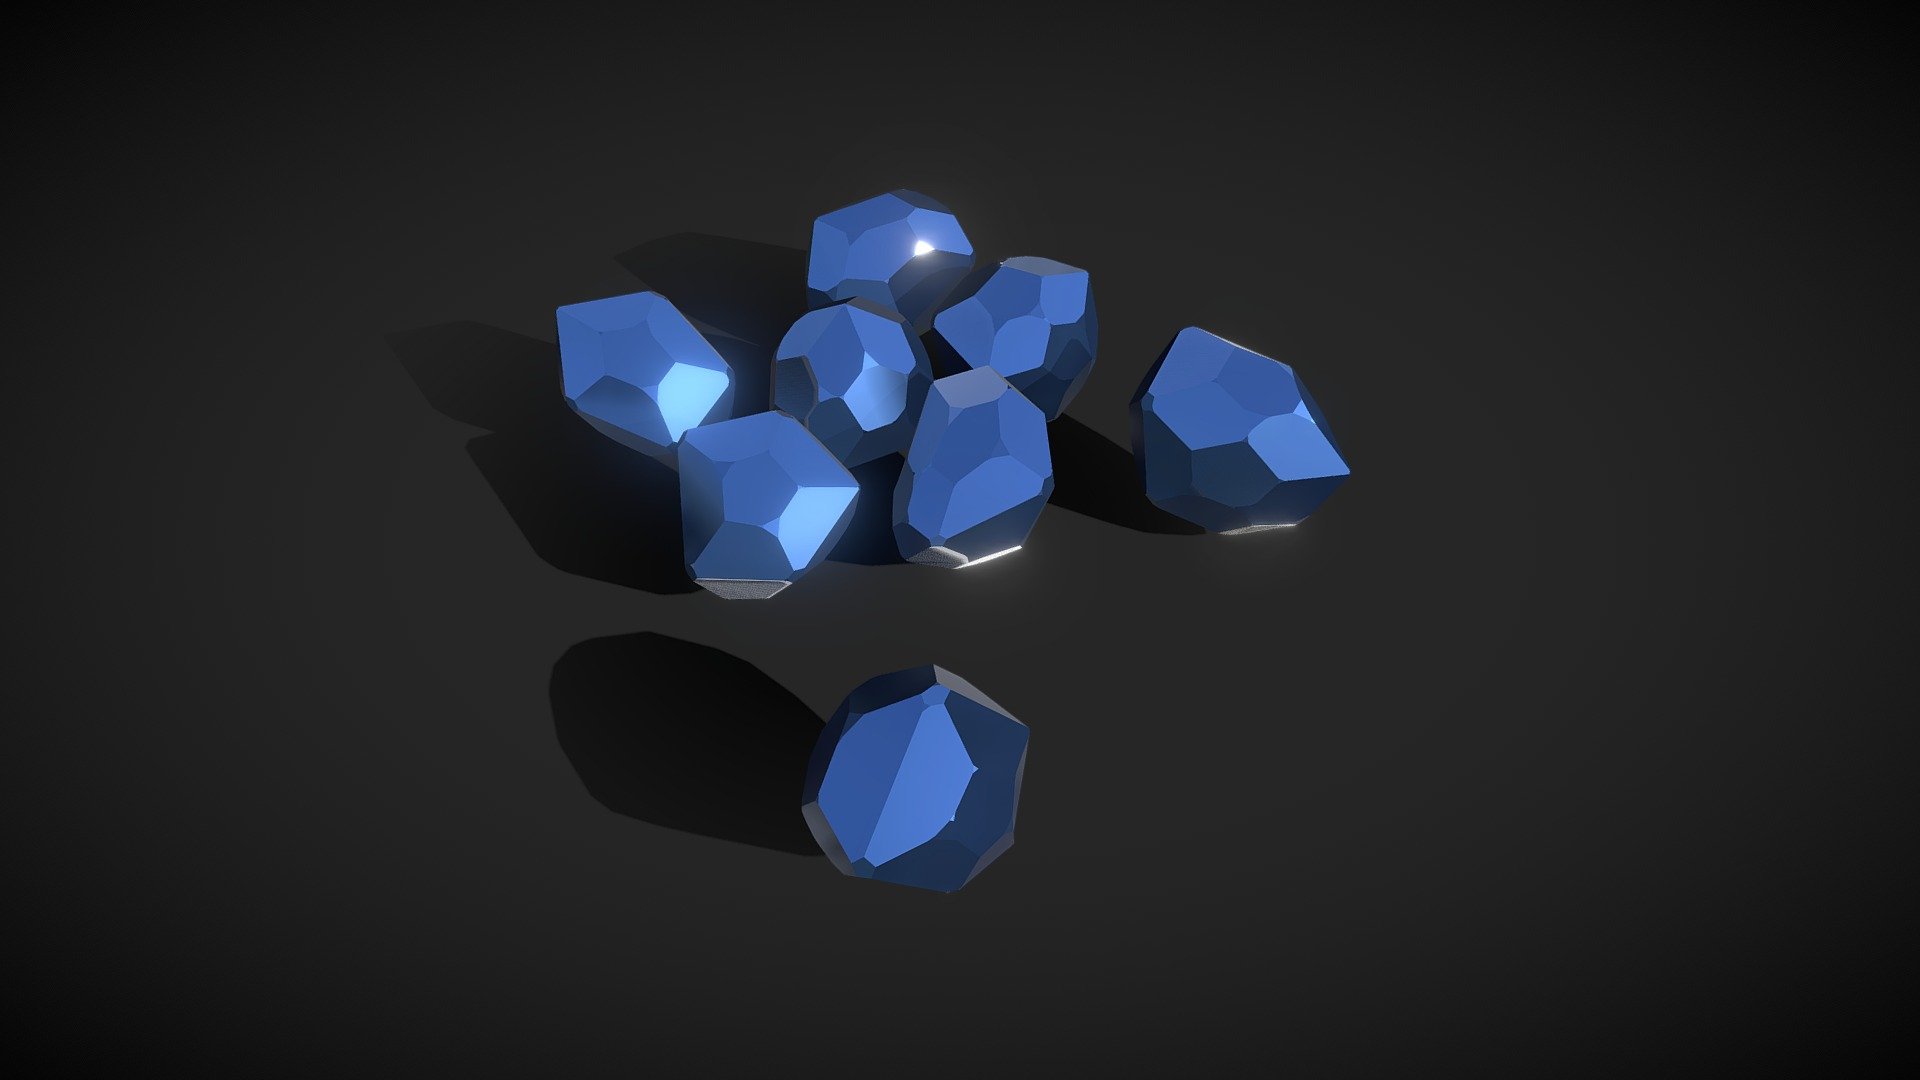 Simple gemstones lowpoly. no uv or textures 3d model